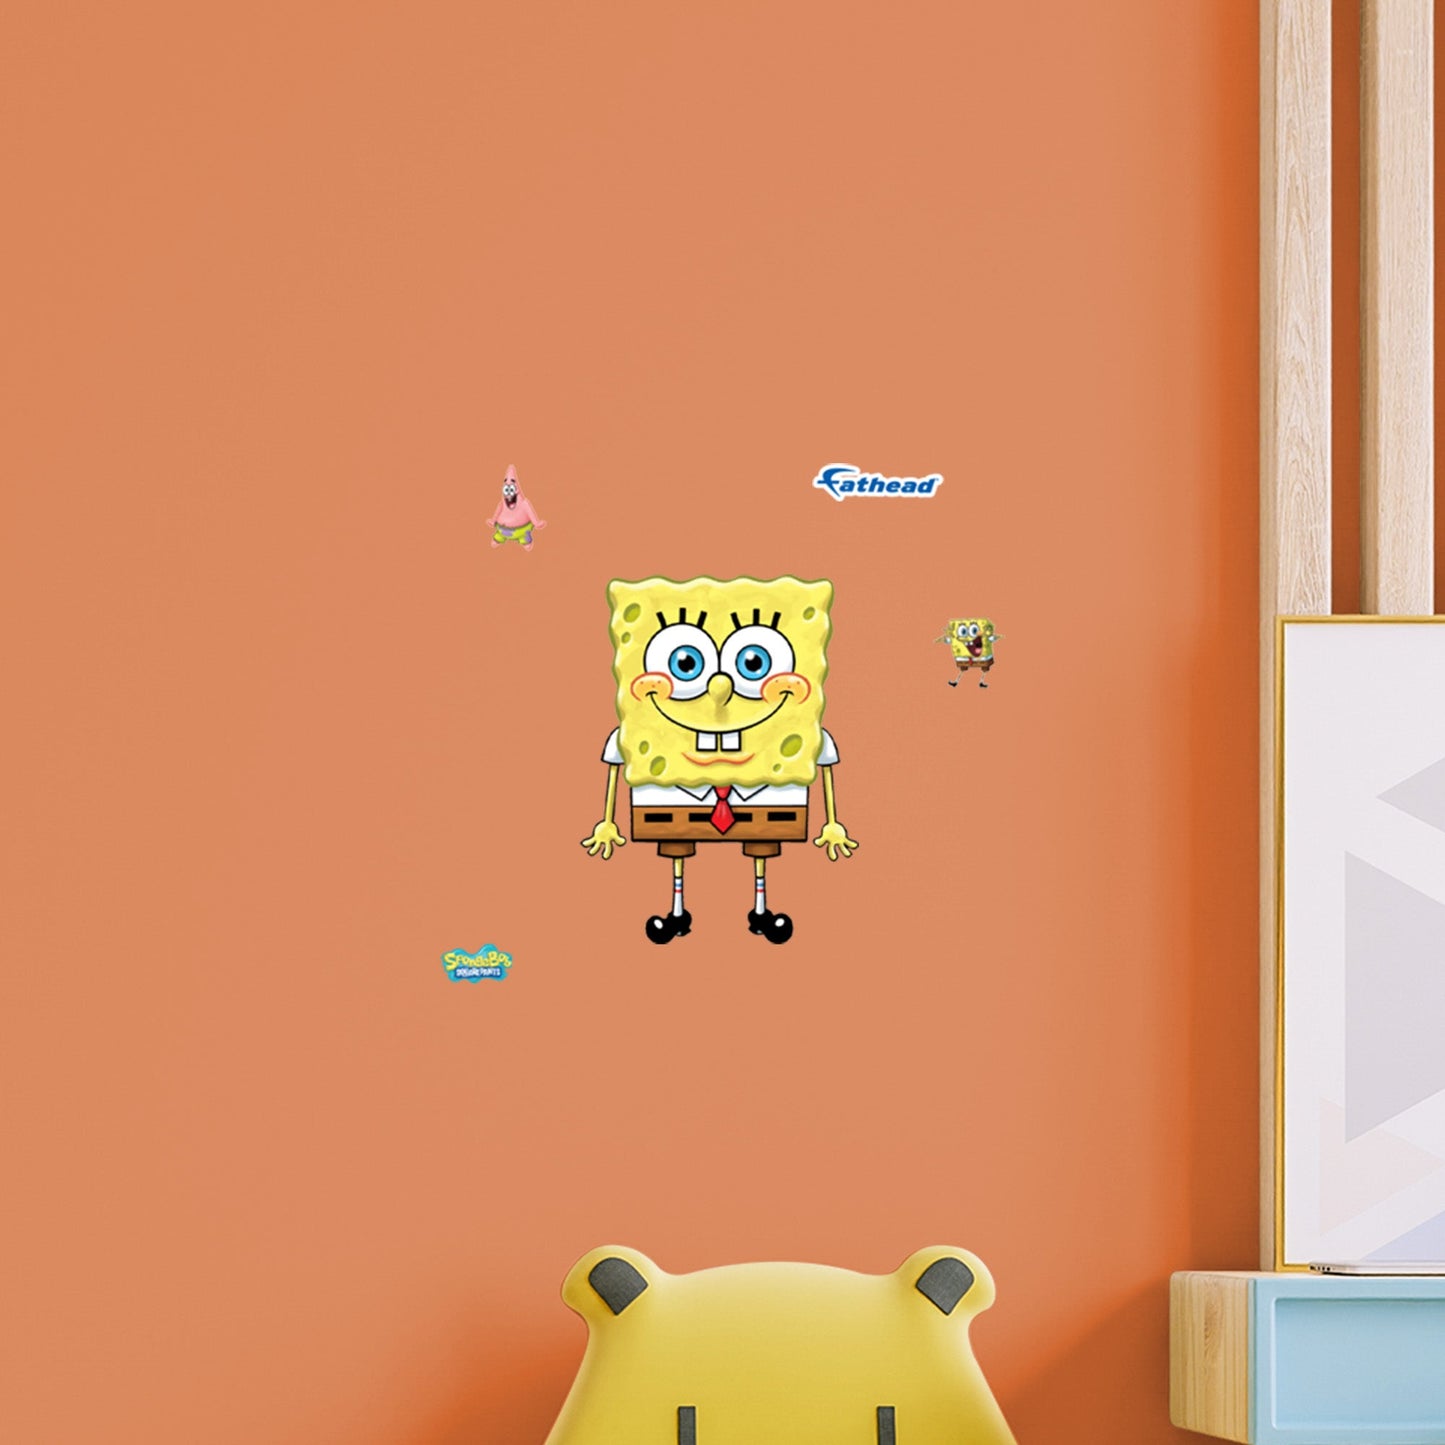 SpongeBob Squarepants: SpongeBob RealBigs - Officially Licensed Nickelodeon Removable Adhesive Decal